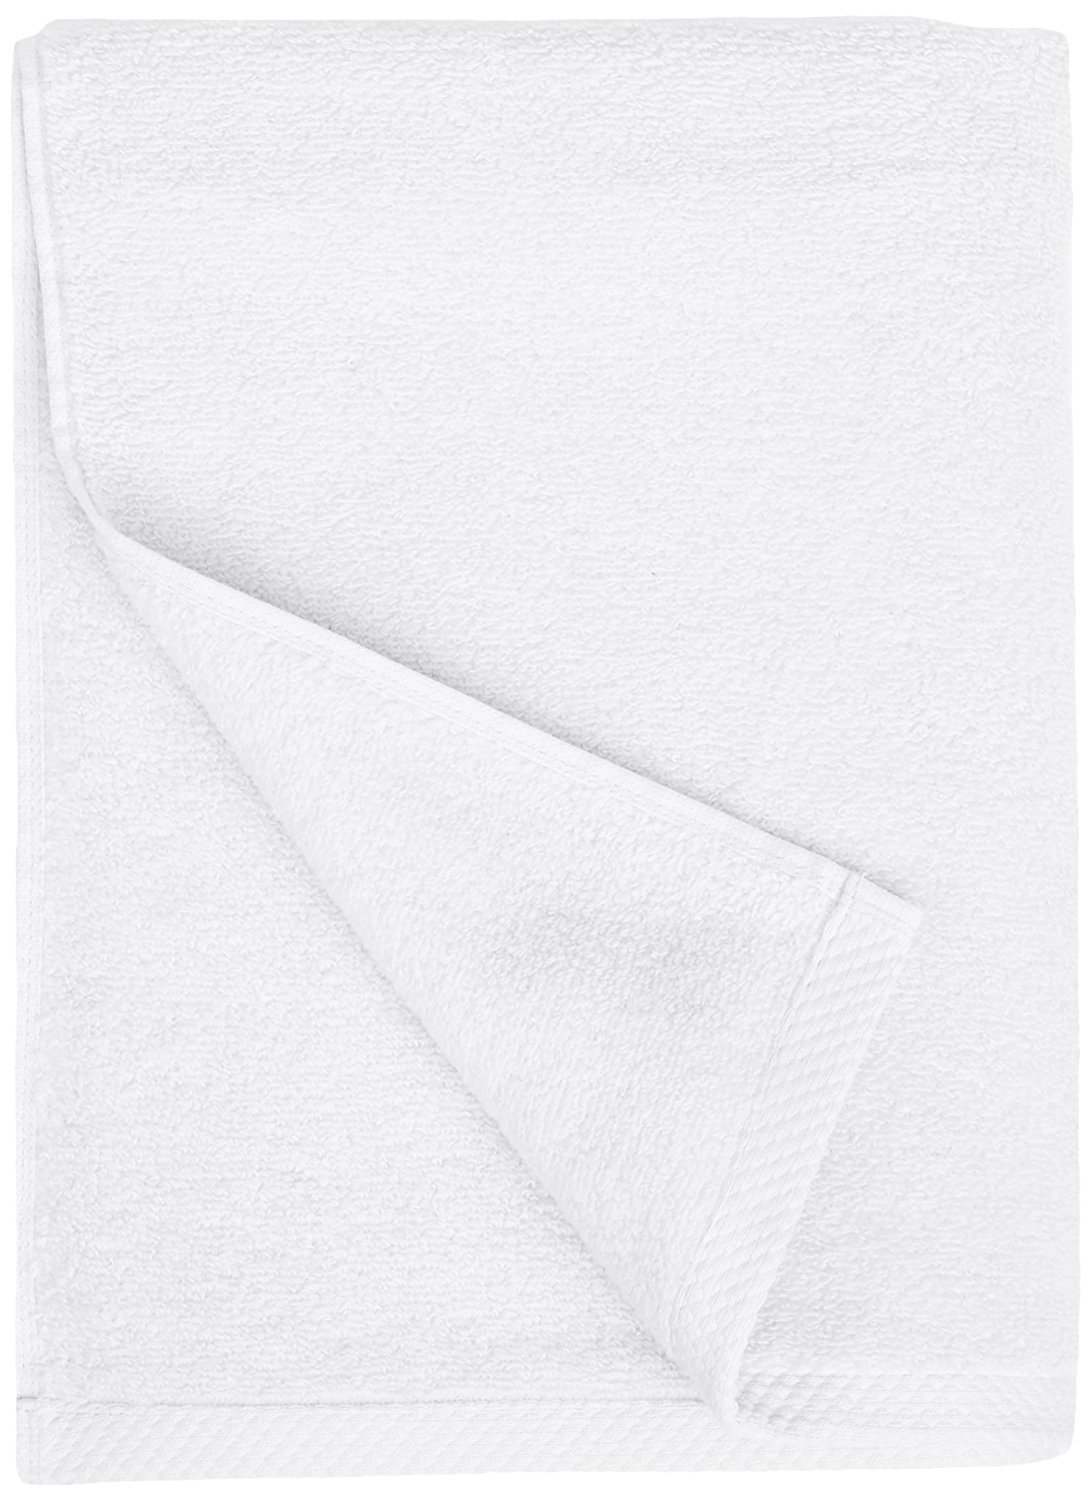 Buy KS 21 Homes Cotton Range Hand Towel Set of 4 Pieces, 500 GSM (White ...